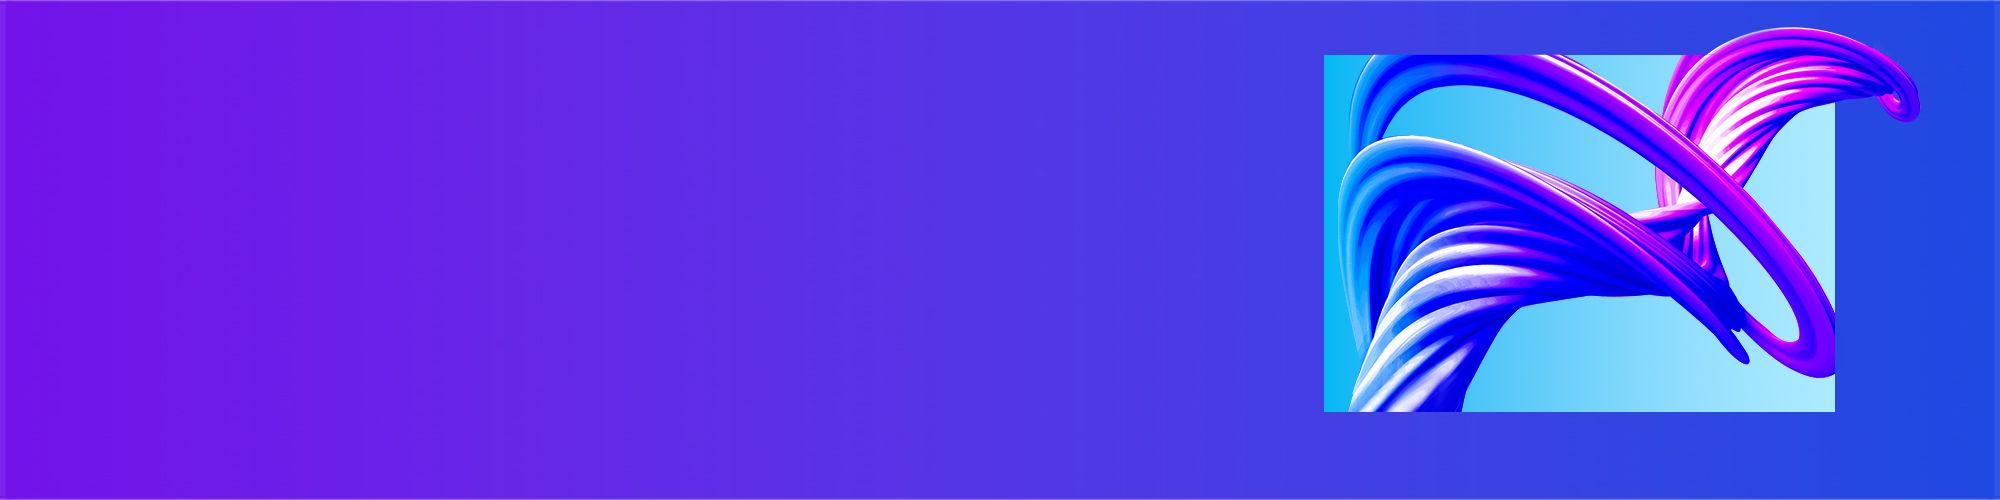 blue-purple-swirly-abstraction